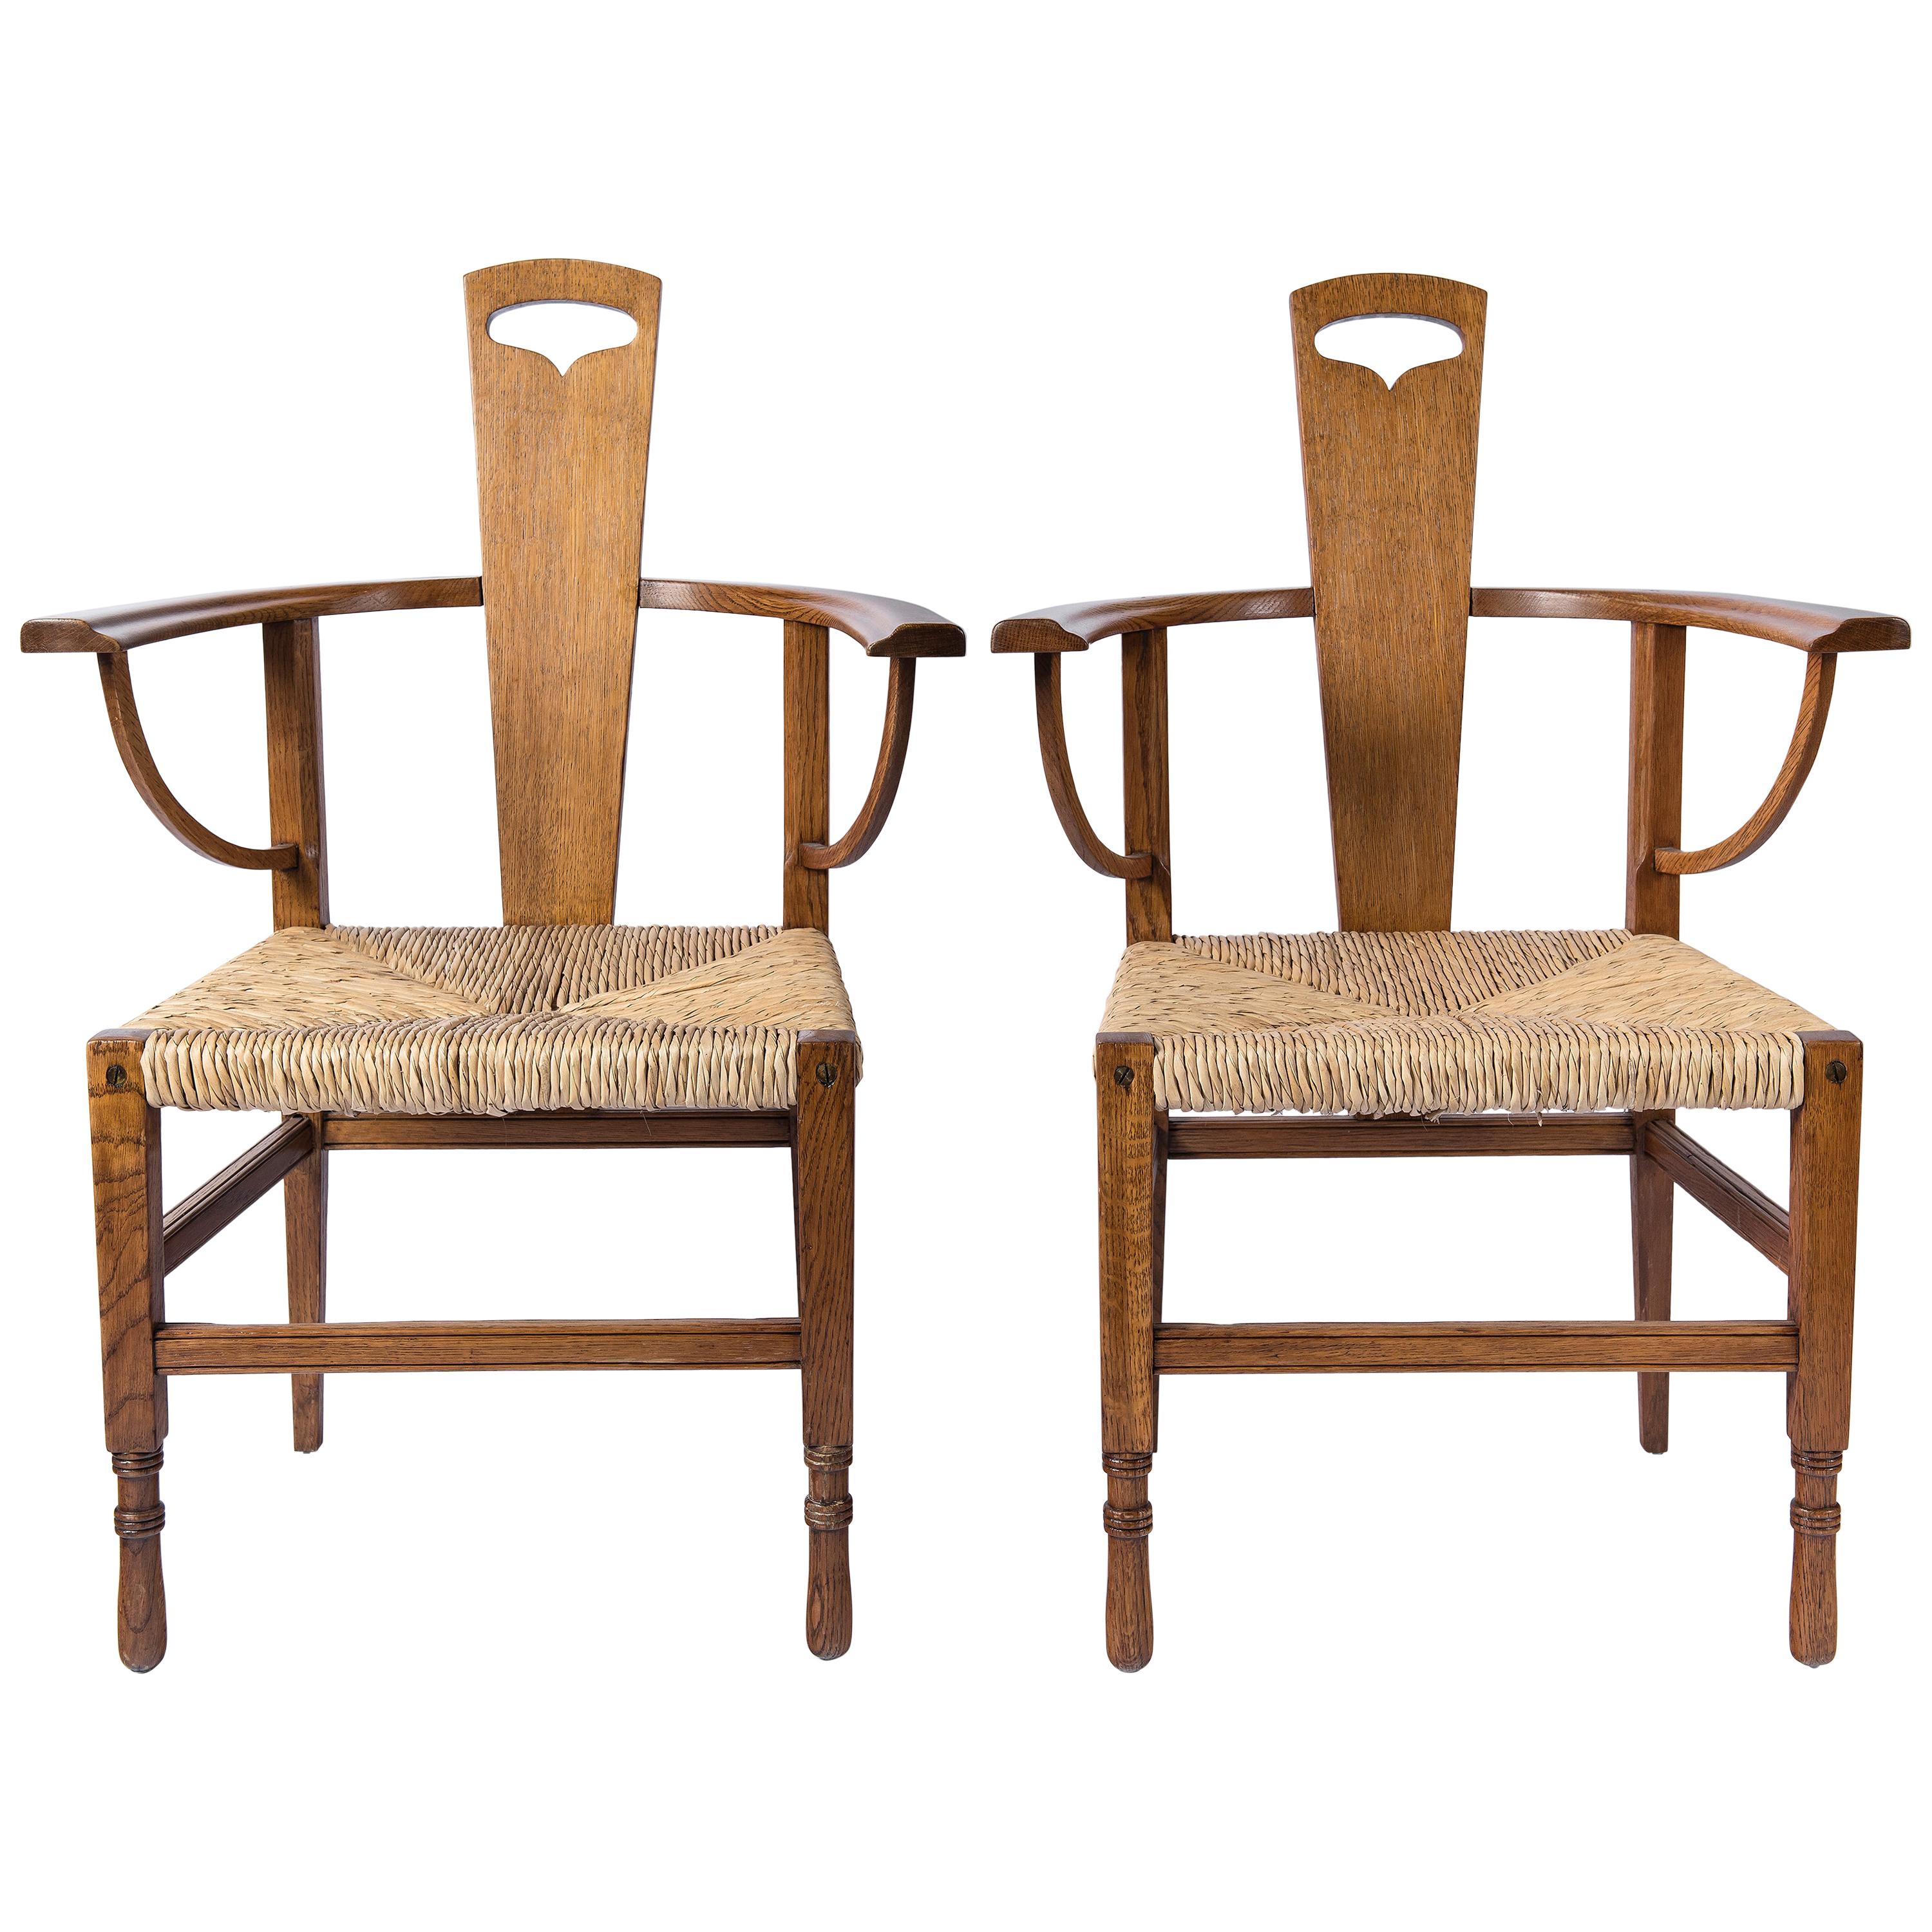 Pair of Oak Wood Armchairs, Attributed to George Walton, Scotland, circa 1890